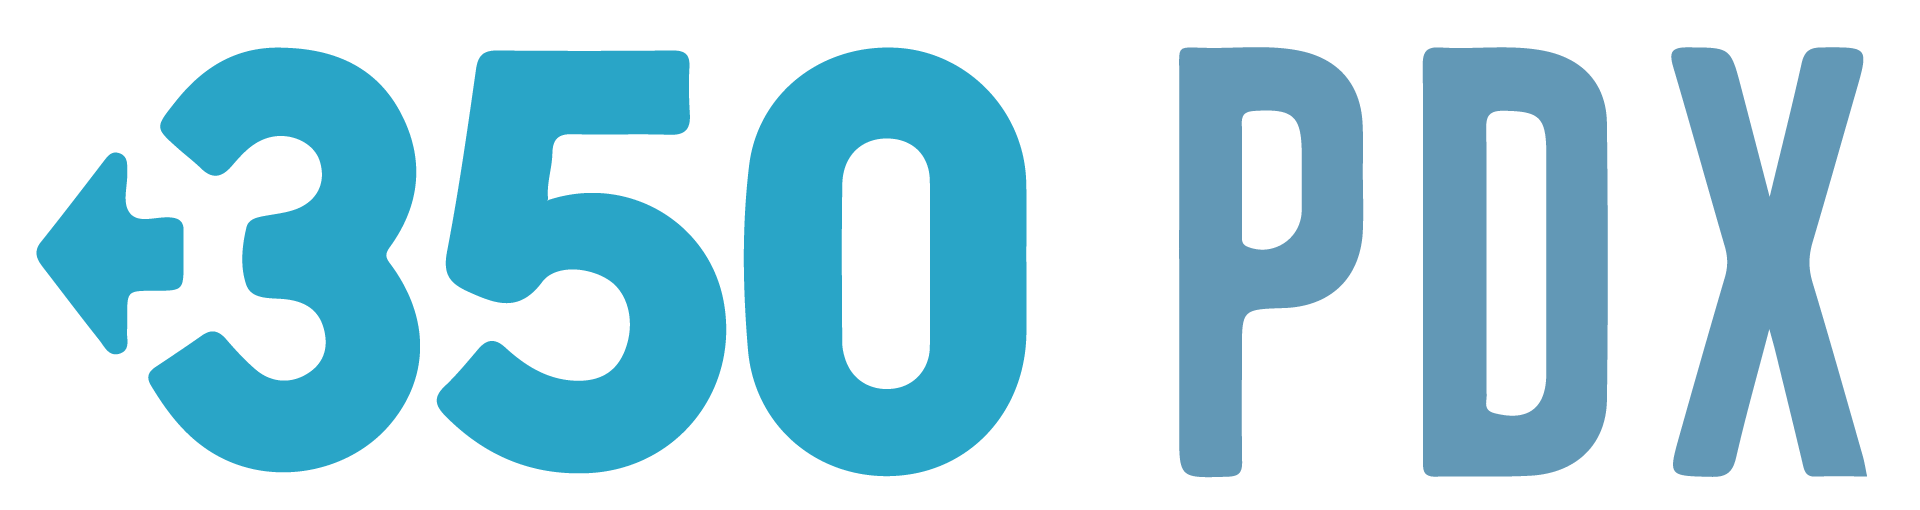 PDX Logo - 350PDX Home - 350PDX